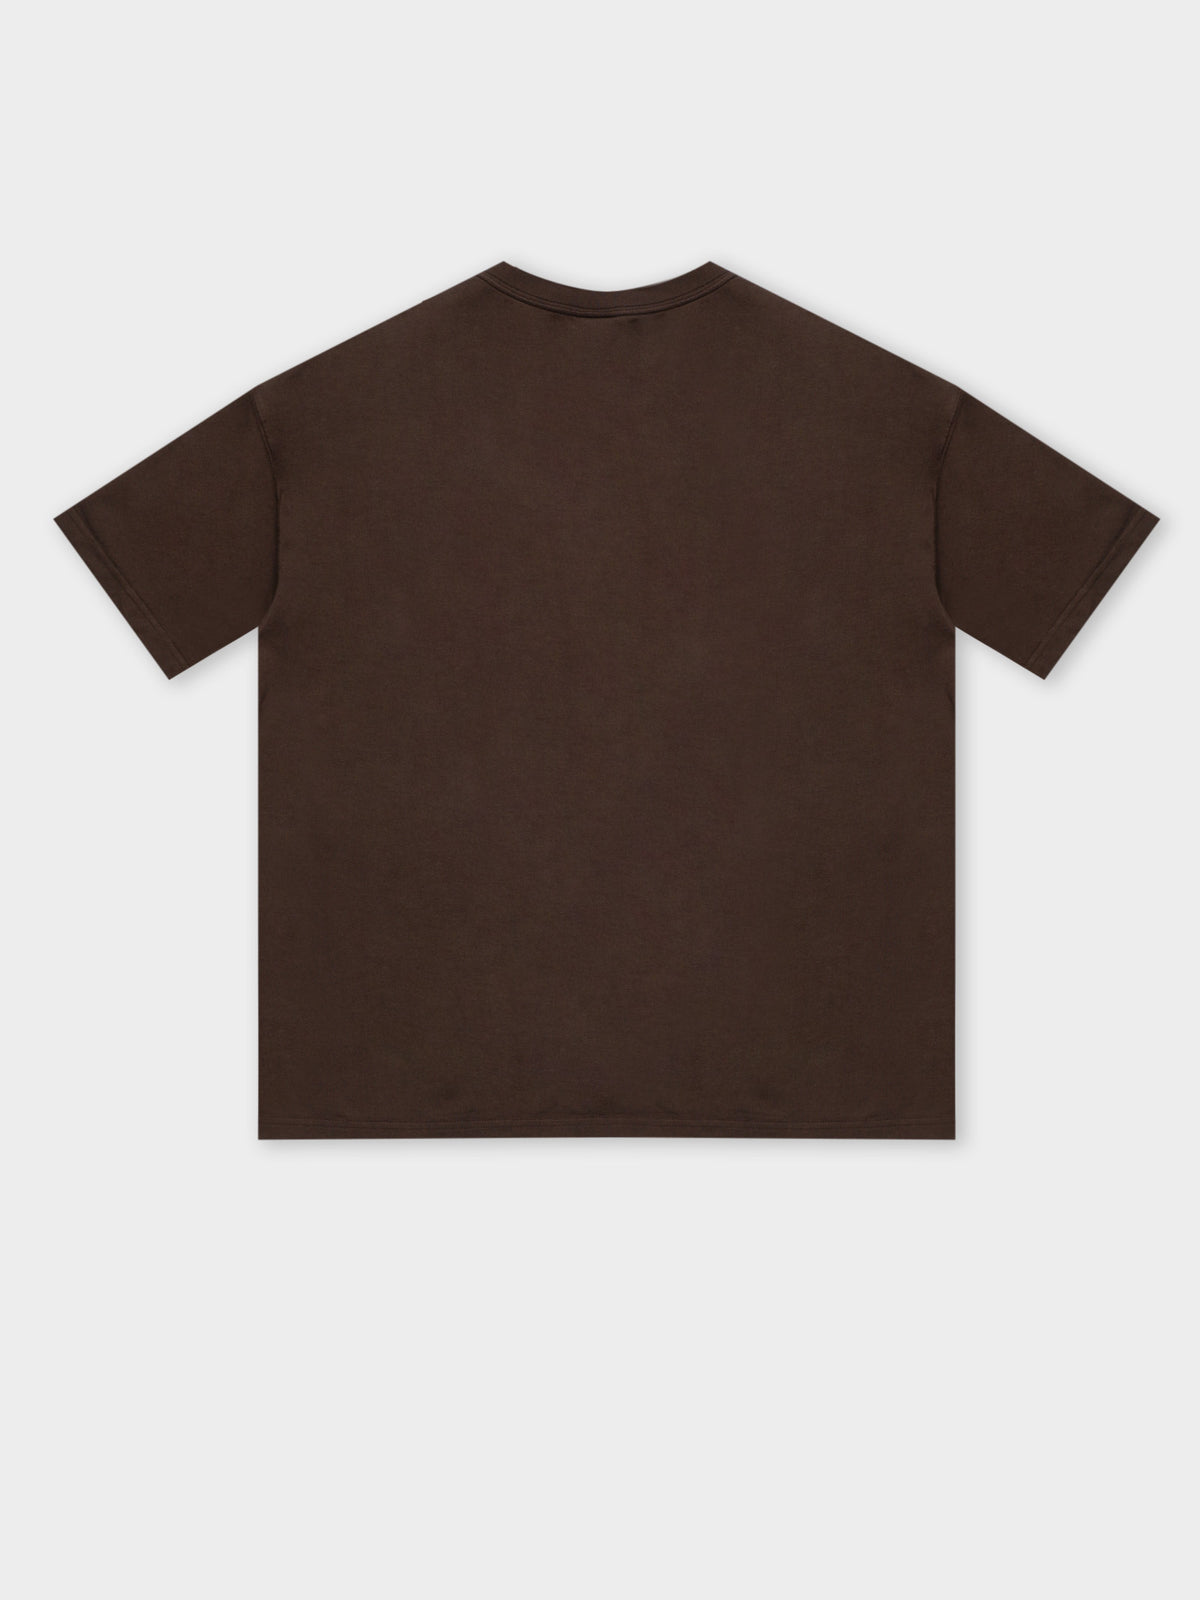 330 Box T-Shirt in Chestnut